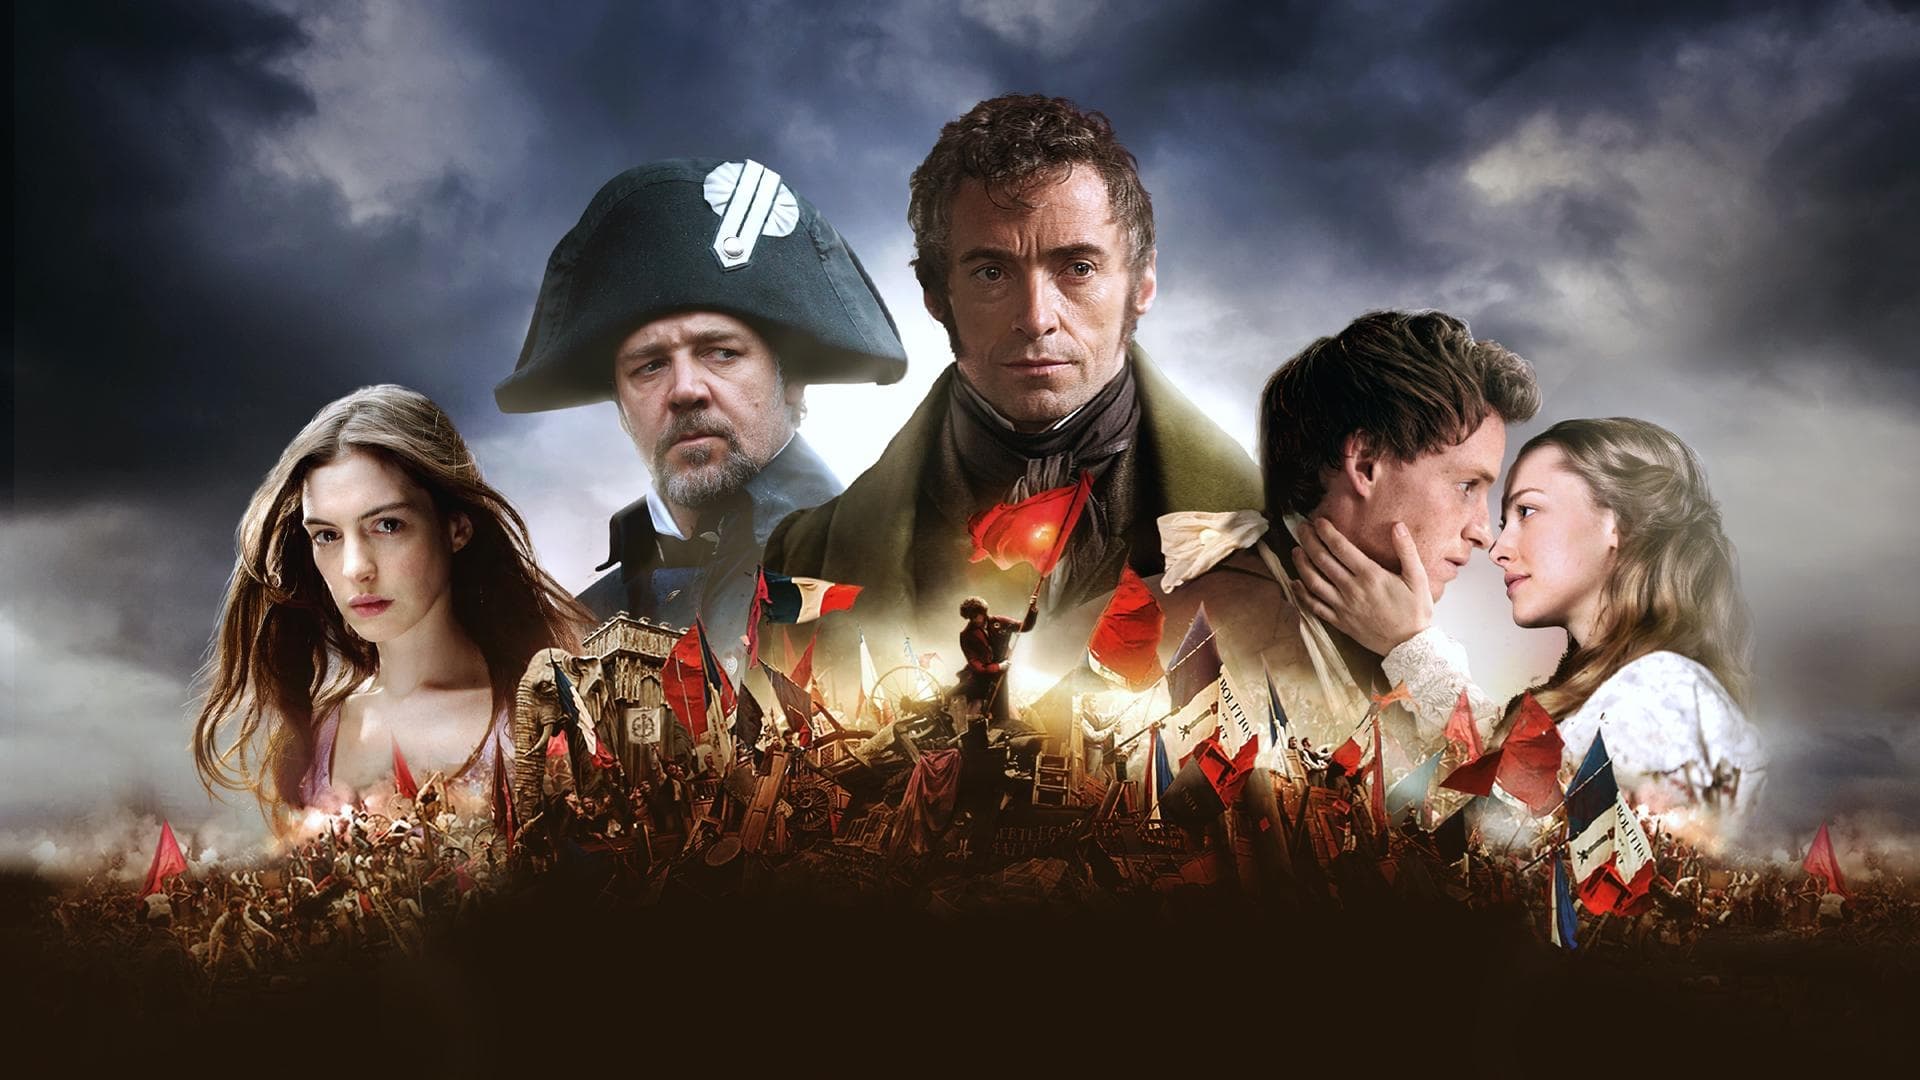 Poster Phim Những Người Khốn Khổ (Les Misérables)